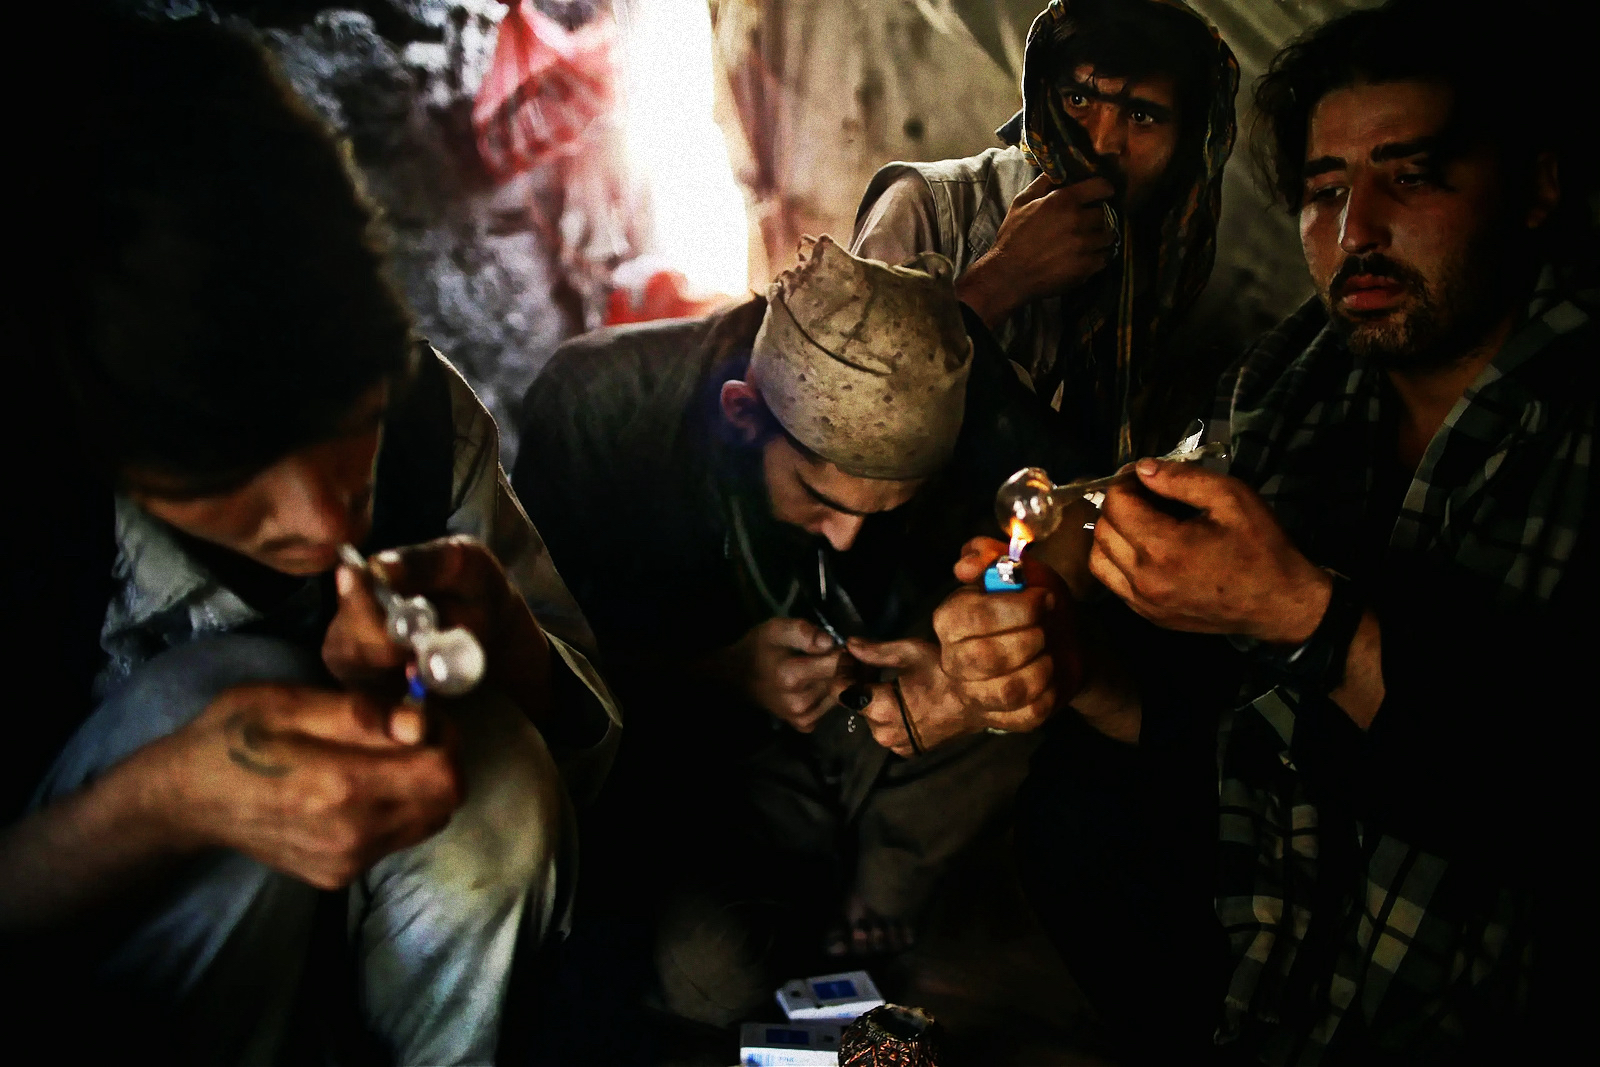 Pakistani heroin addicts in Kabul